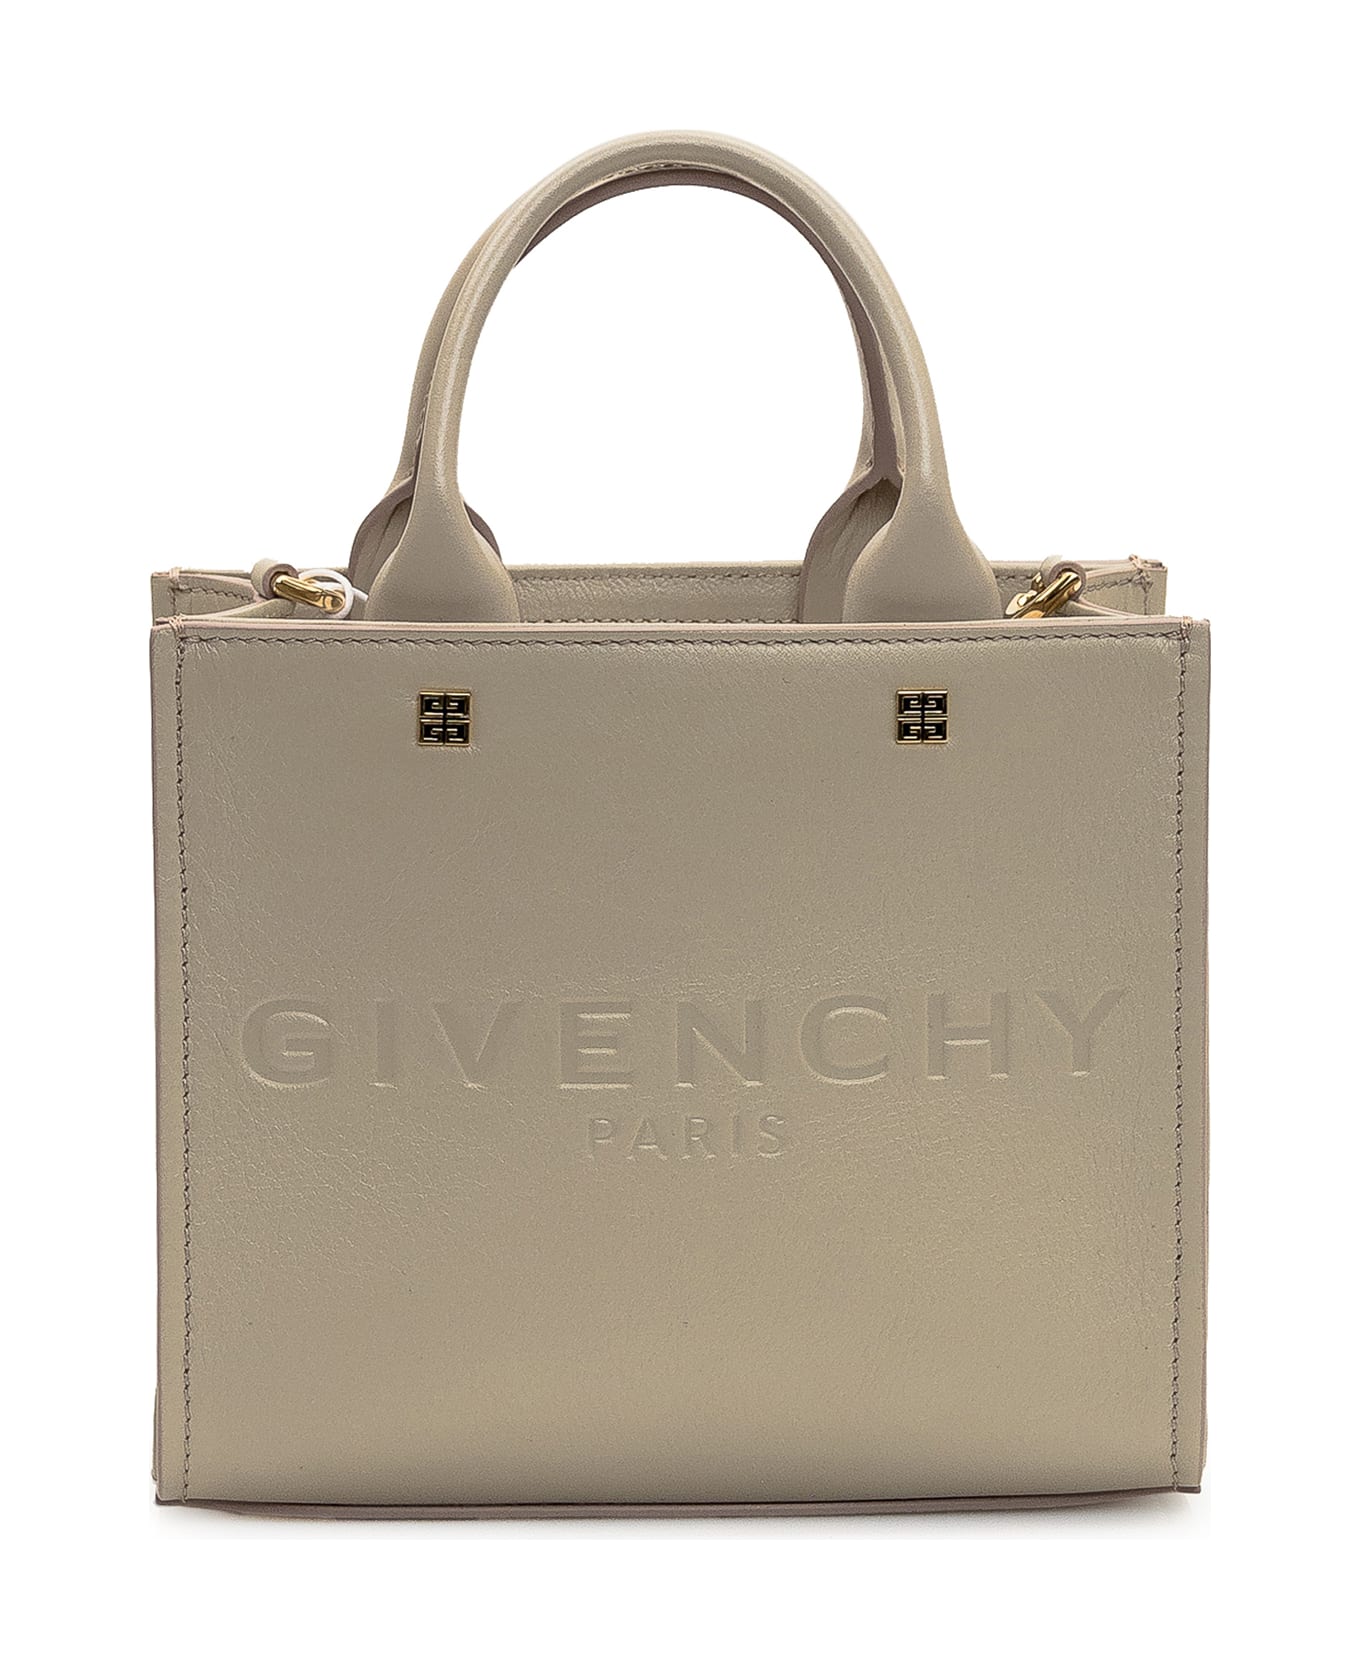 Givenchy G Tote Bag - NATURAL BEIGE